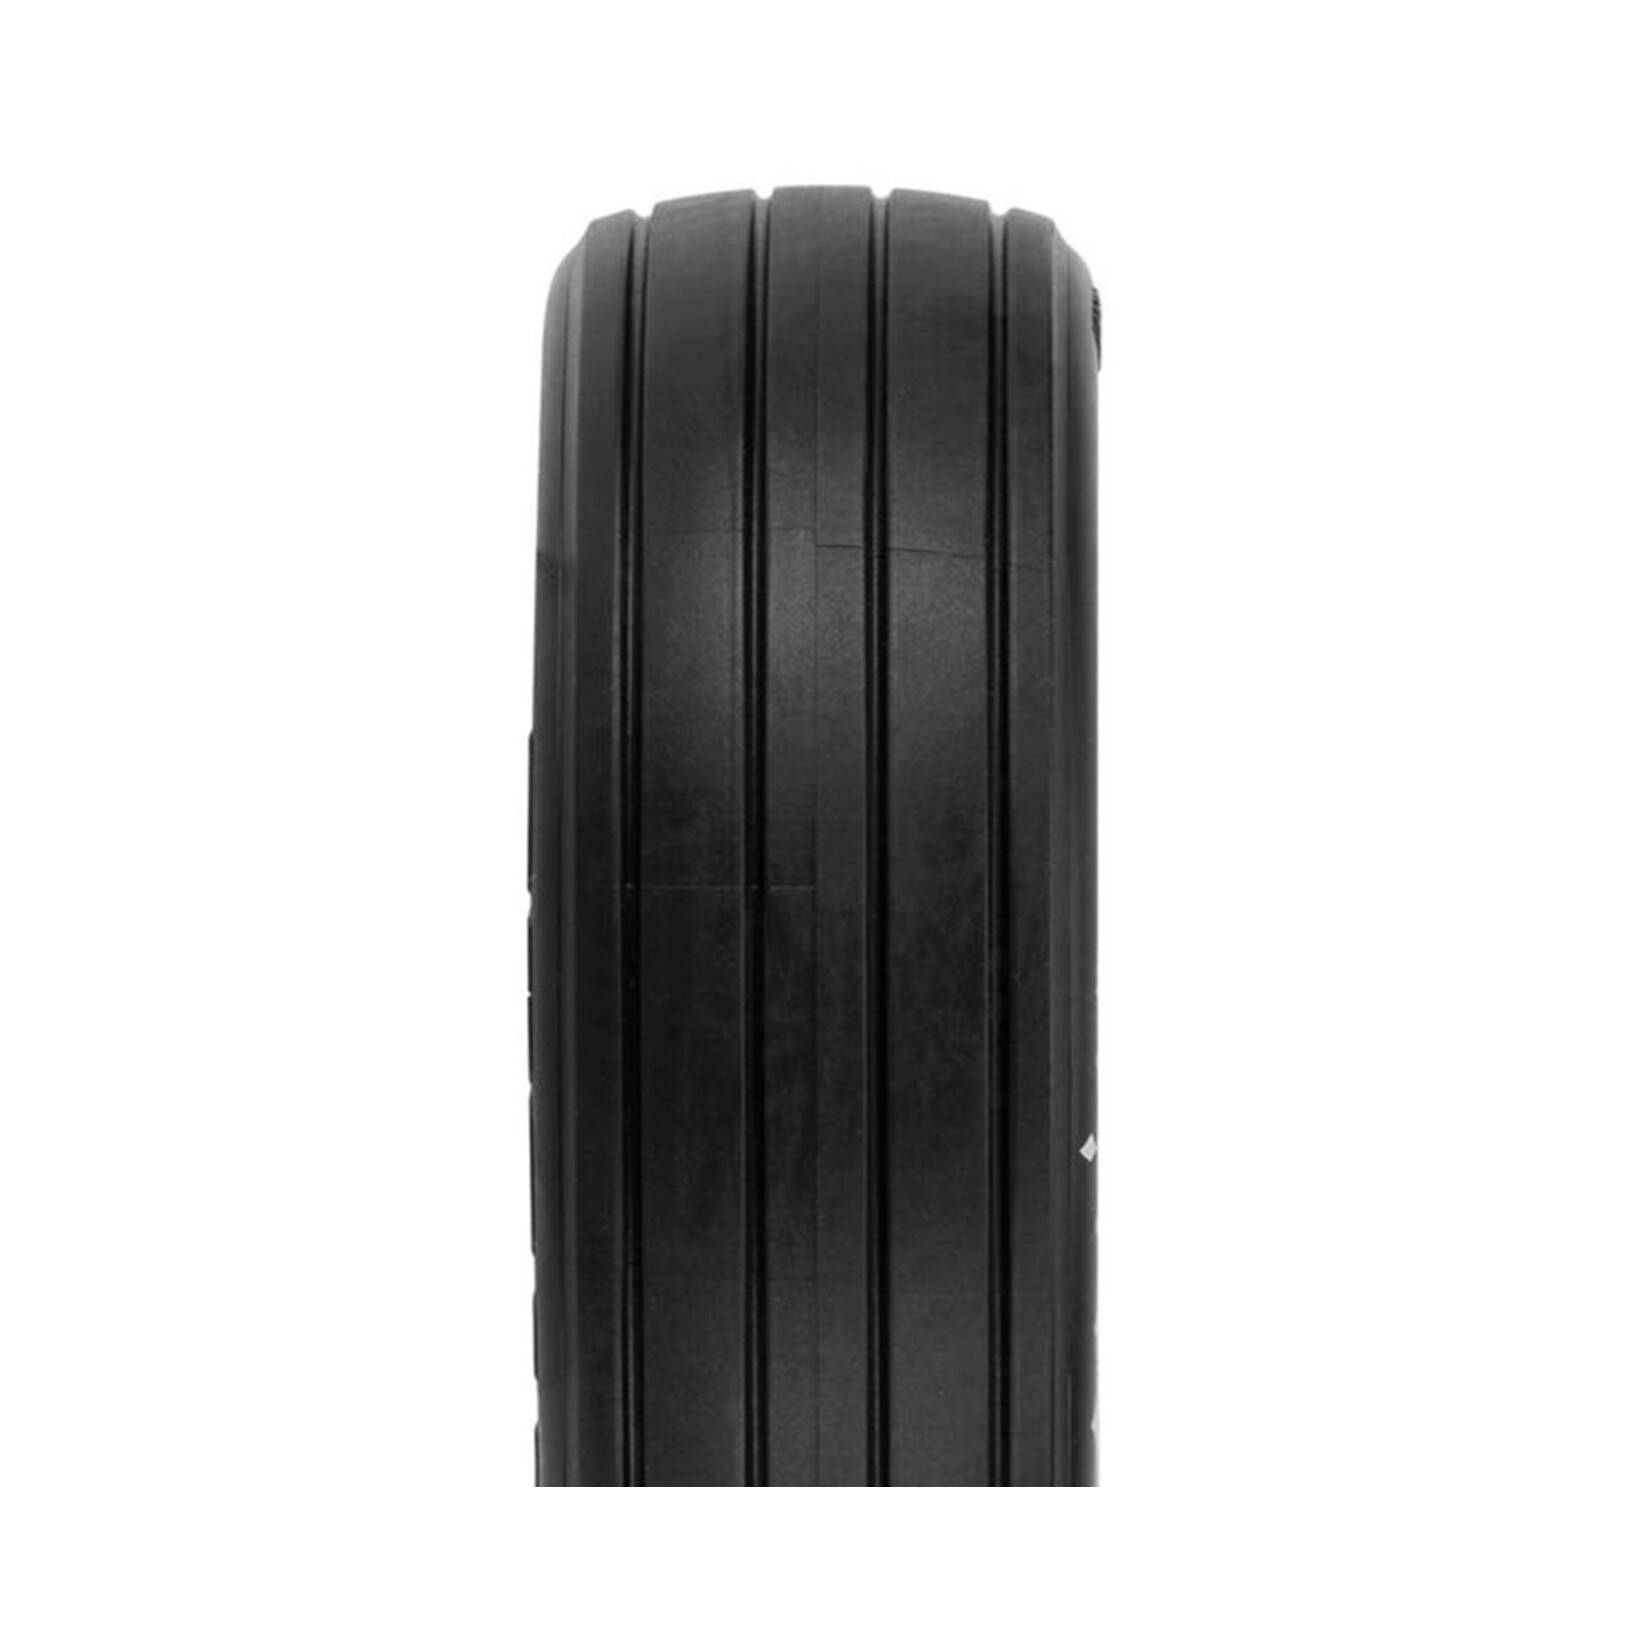 Pro-Line Pro-Line Hoosier Drag 2.2" Front Tires (2) (S3) #10158-203